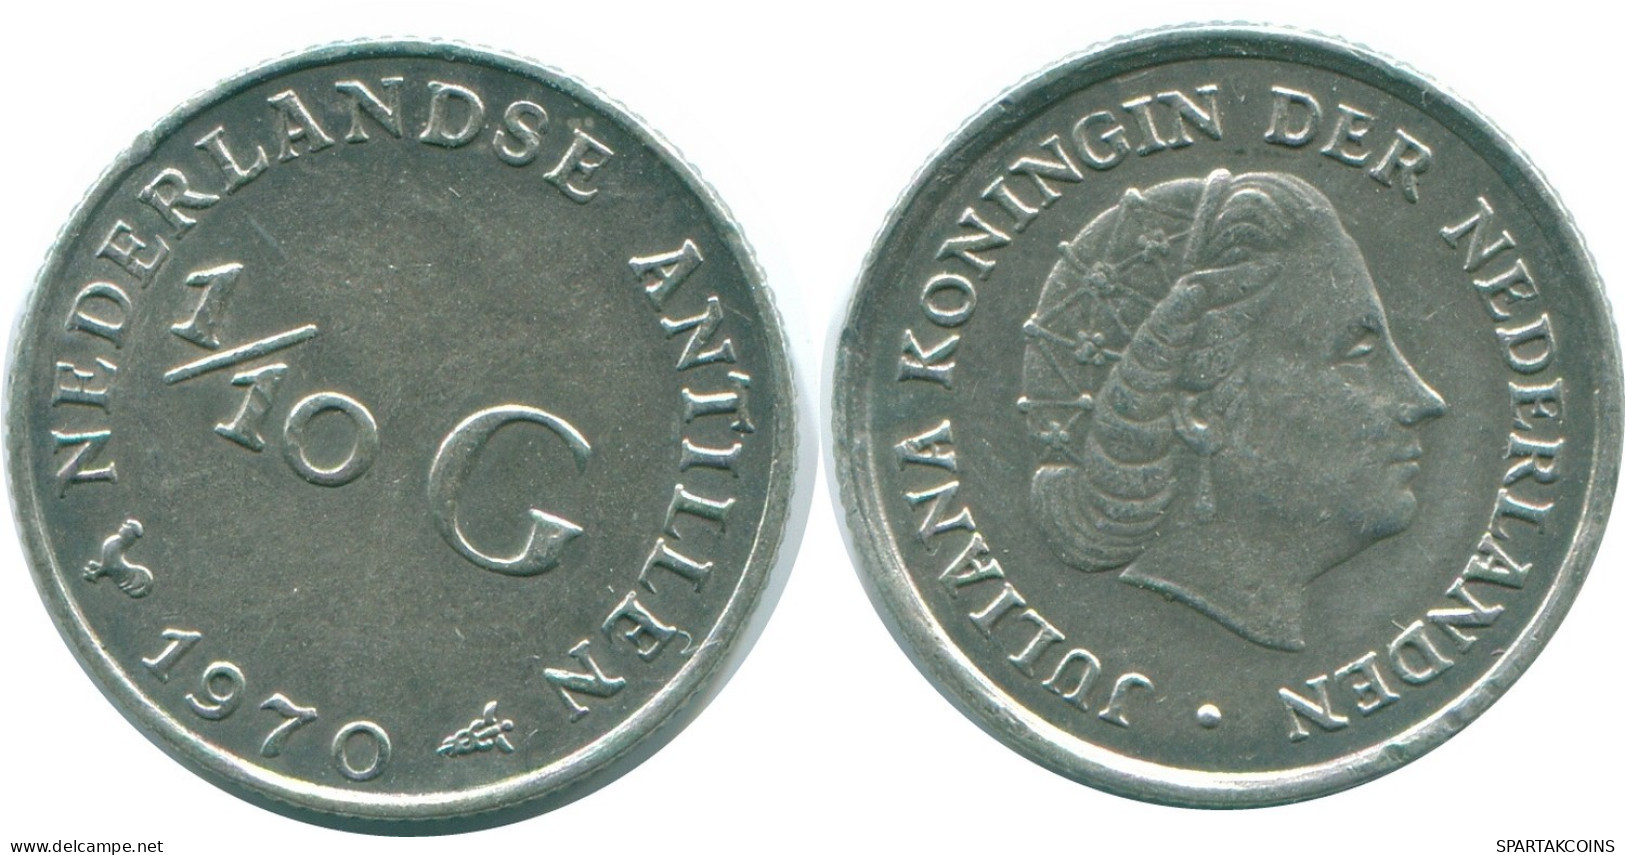 1/10 GULDEN 1970 NETHERLANDS ANTILLES SILVER Colonial Coin #NL12981.3.U.A - Antilles Néerlandaises